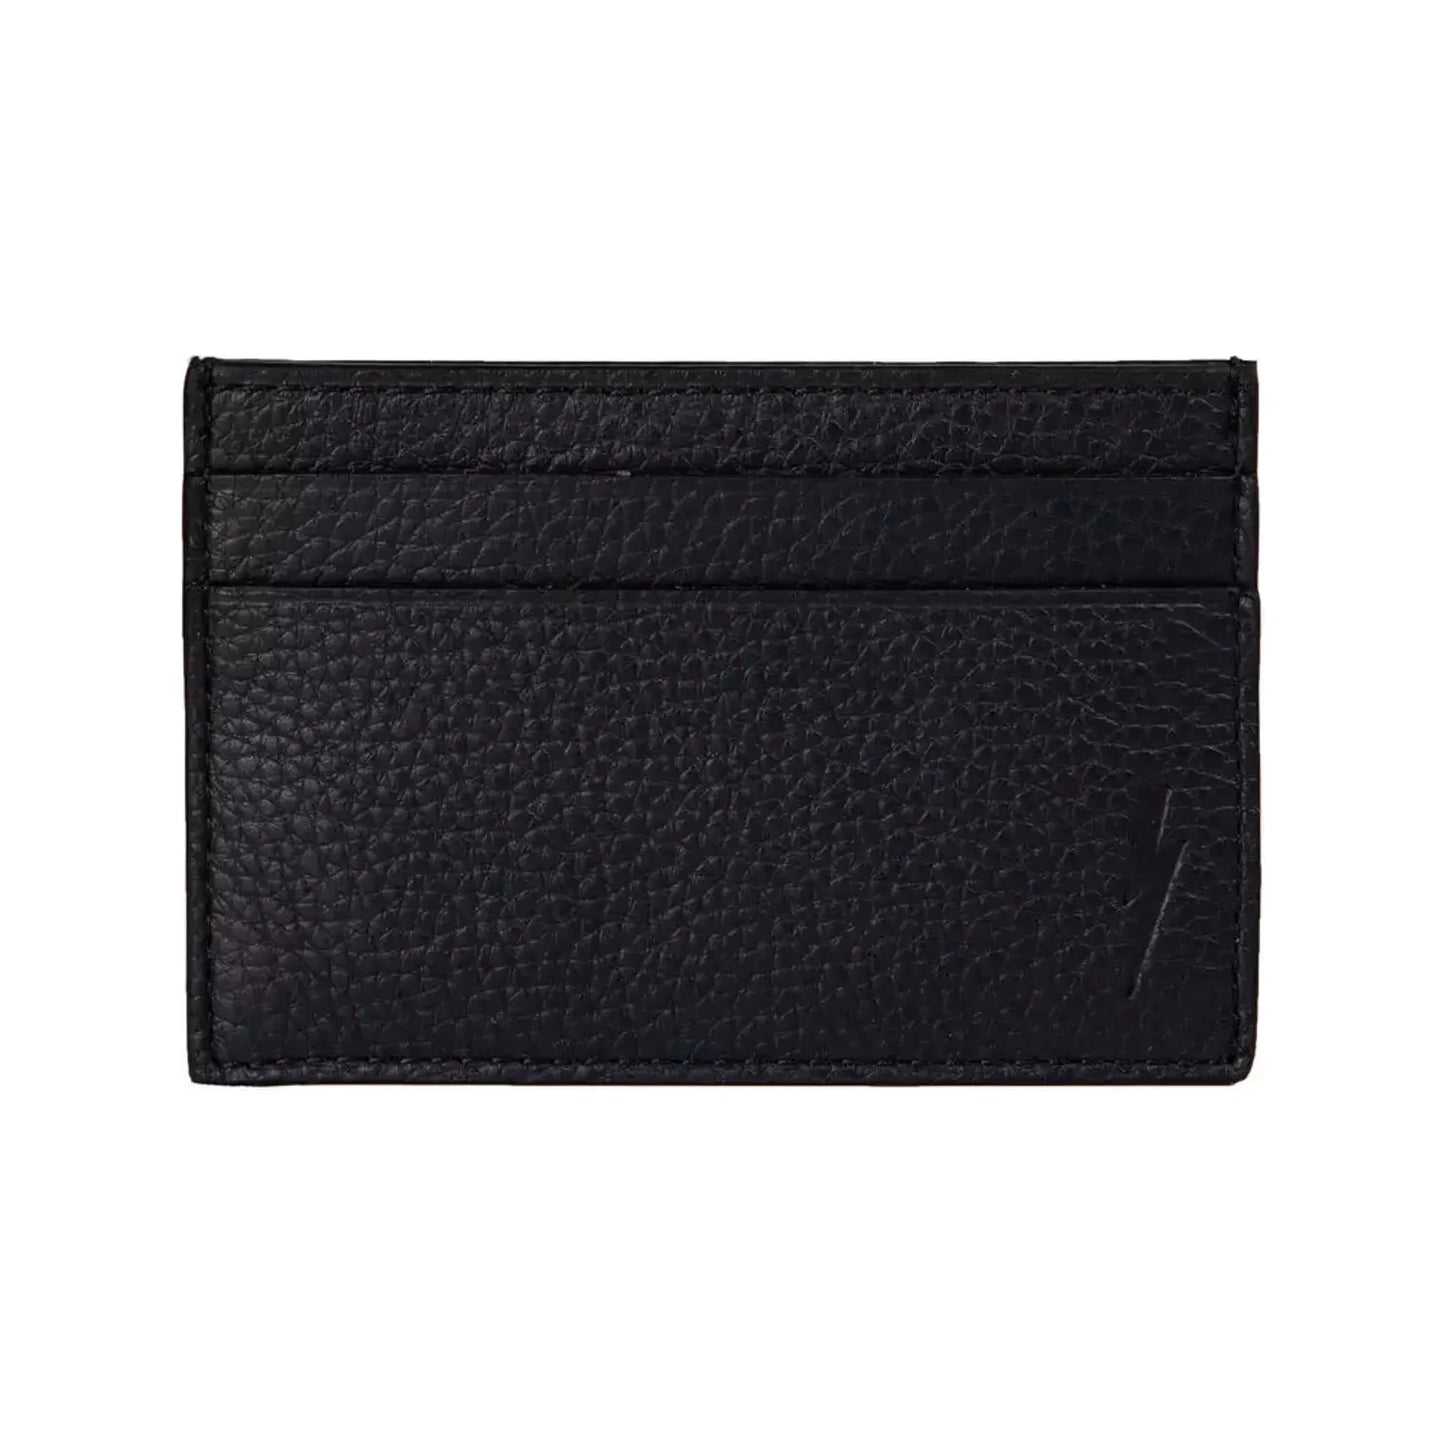 Neil Barrett Sleek Black Leather Card Holder Wallet black-wallet-3